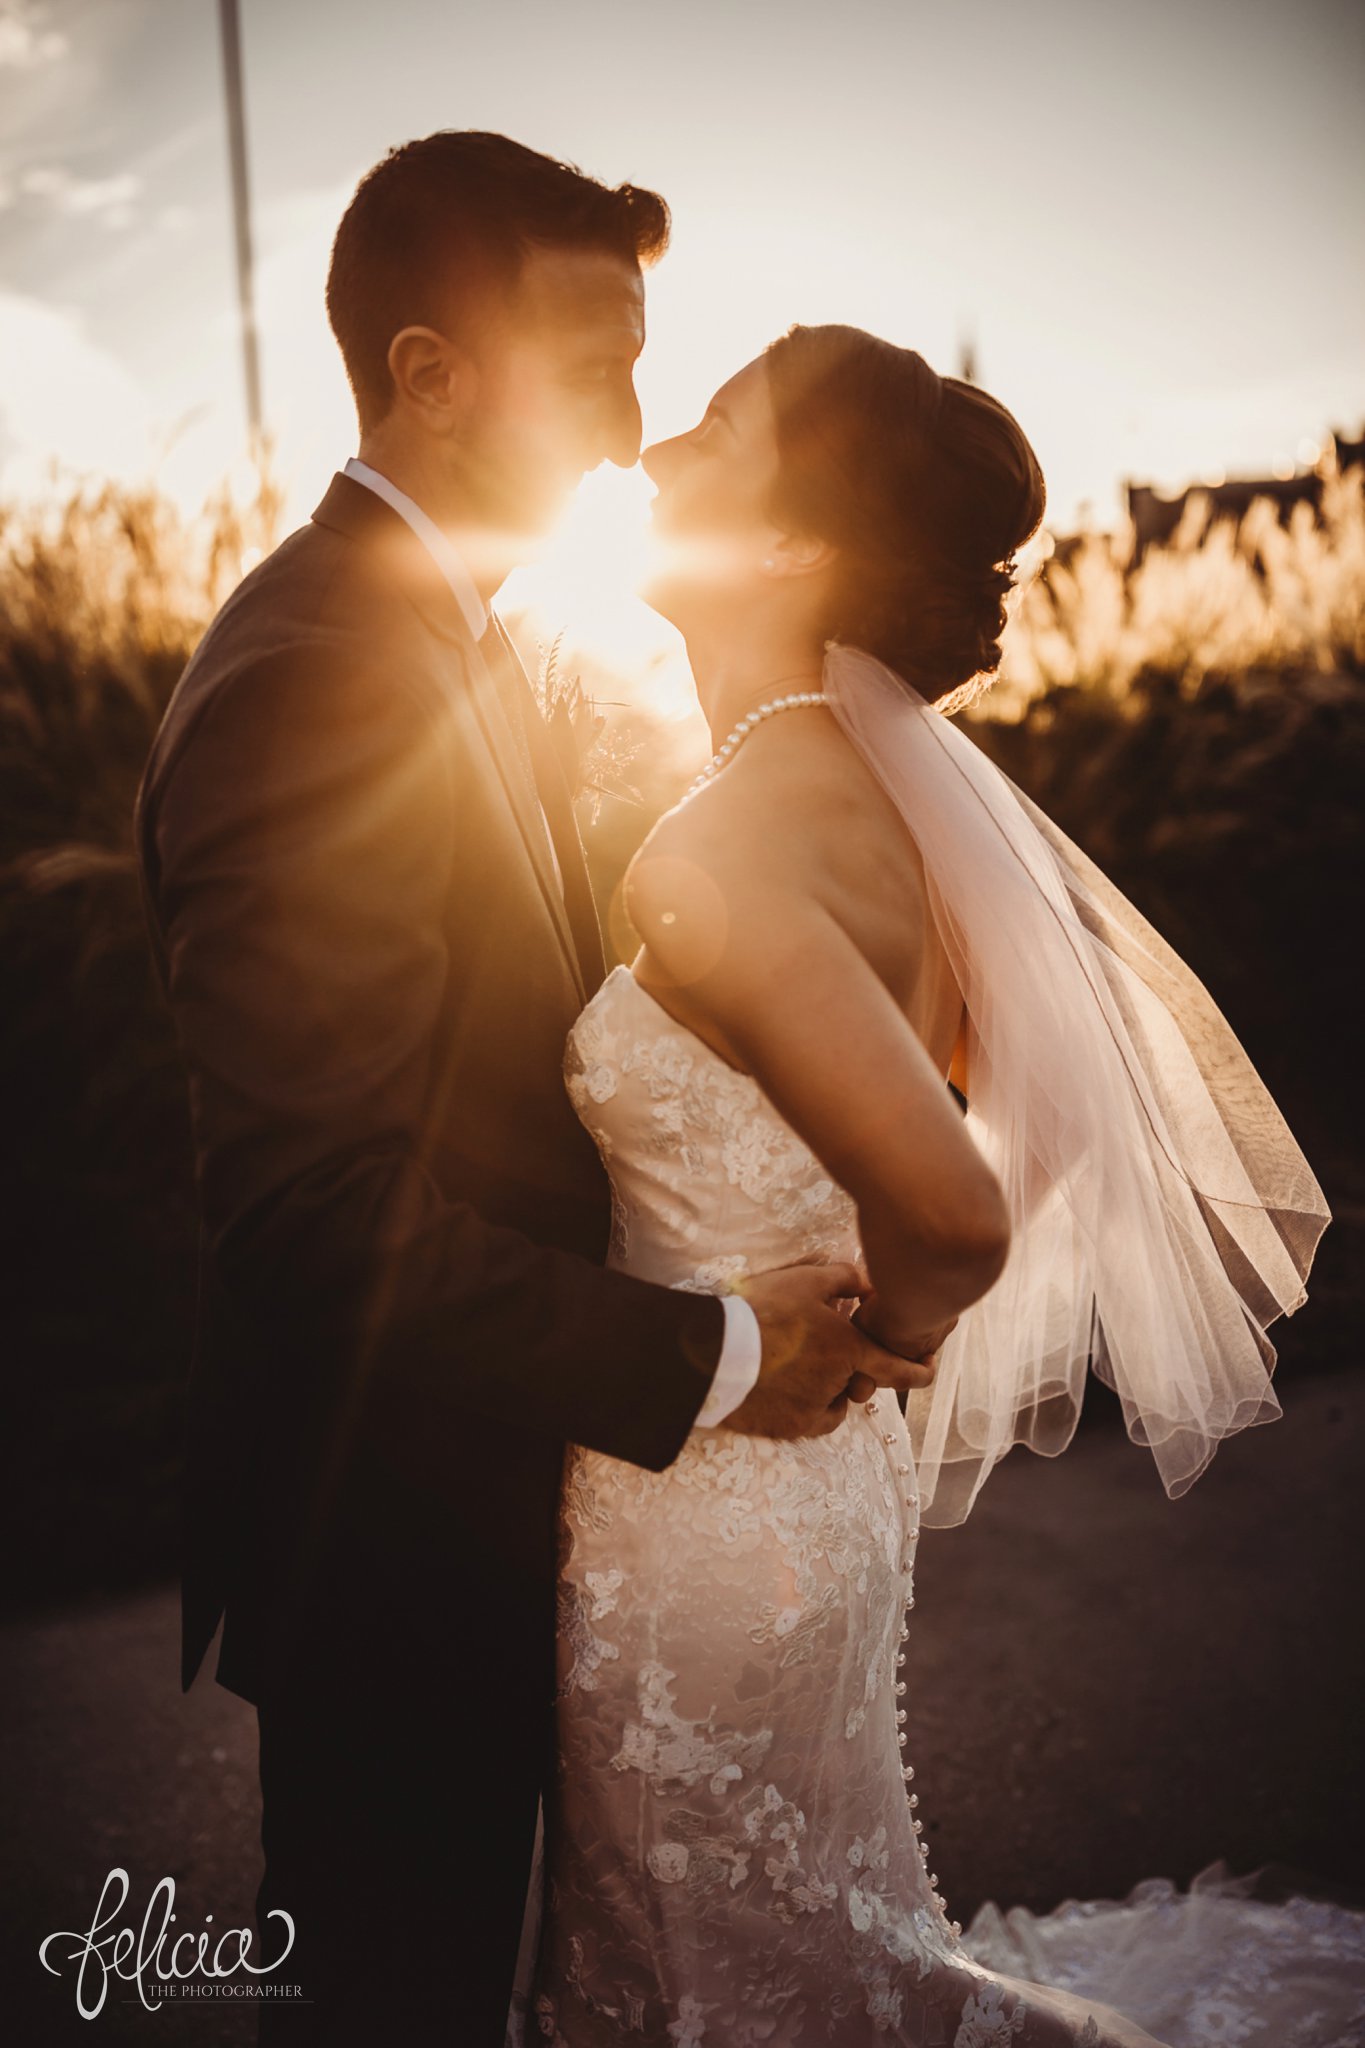 images by feliciathephotographer.com | wedding photographer | kansas city | portraits | plaza fountains | pearls | grey suit | the black tux | emily hart | shane co | sunset | golden hour | romantic | joy | 